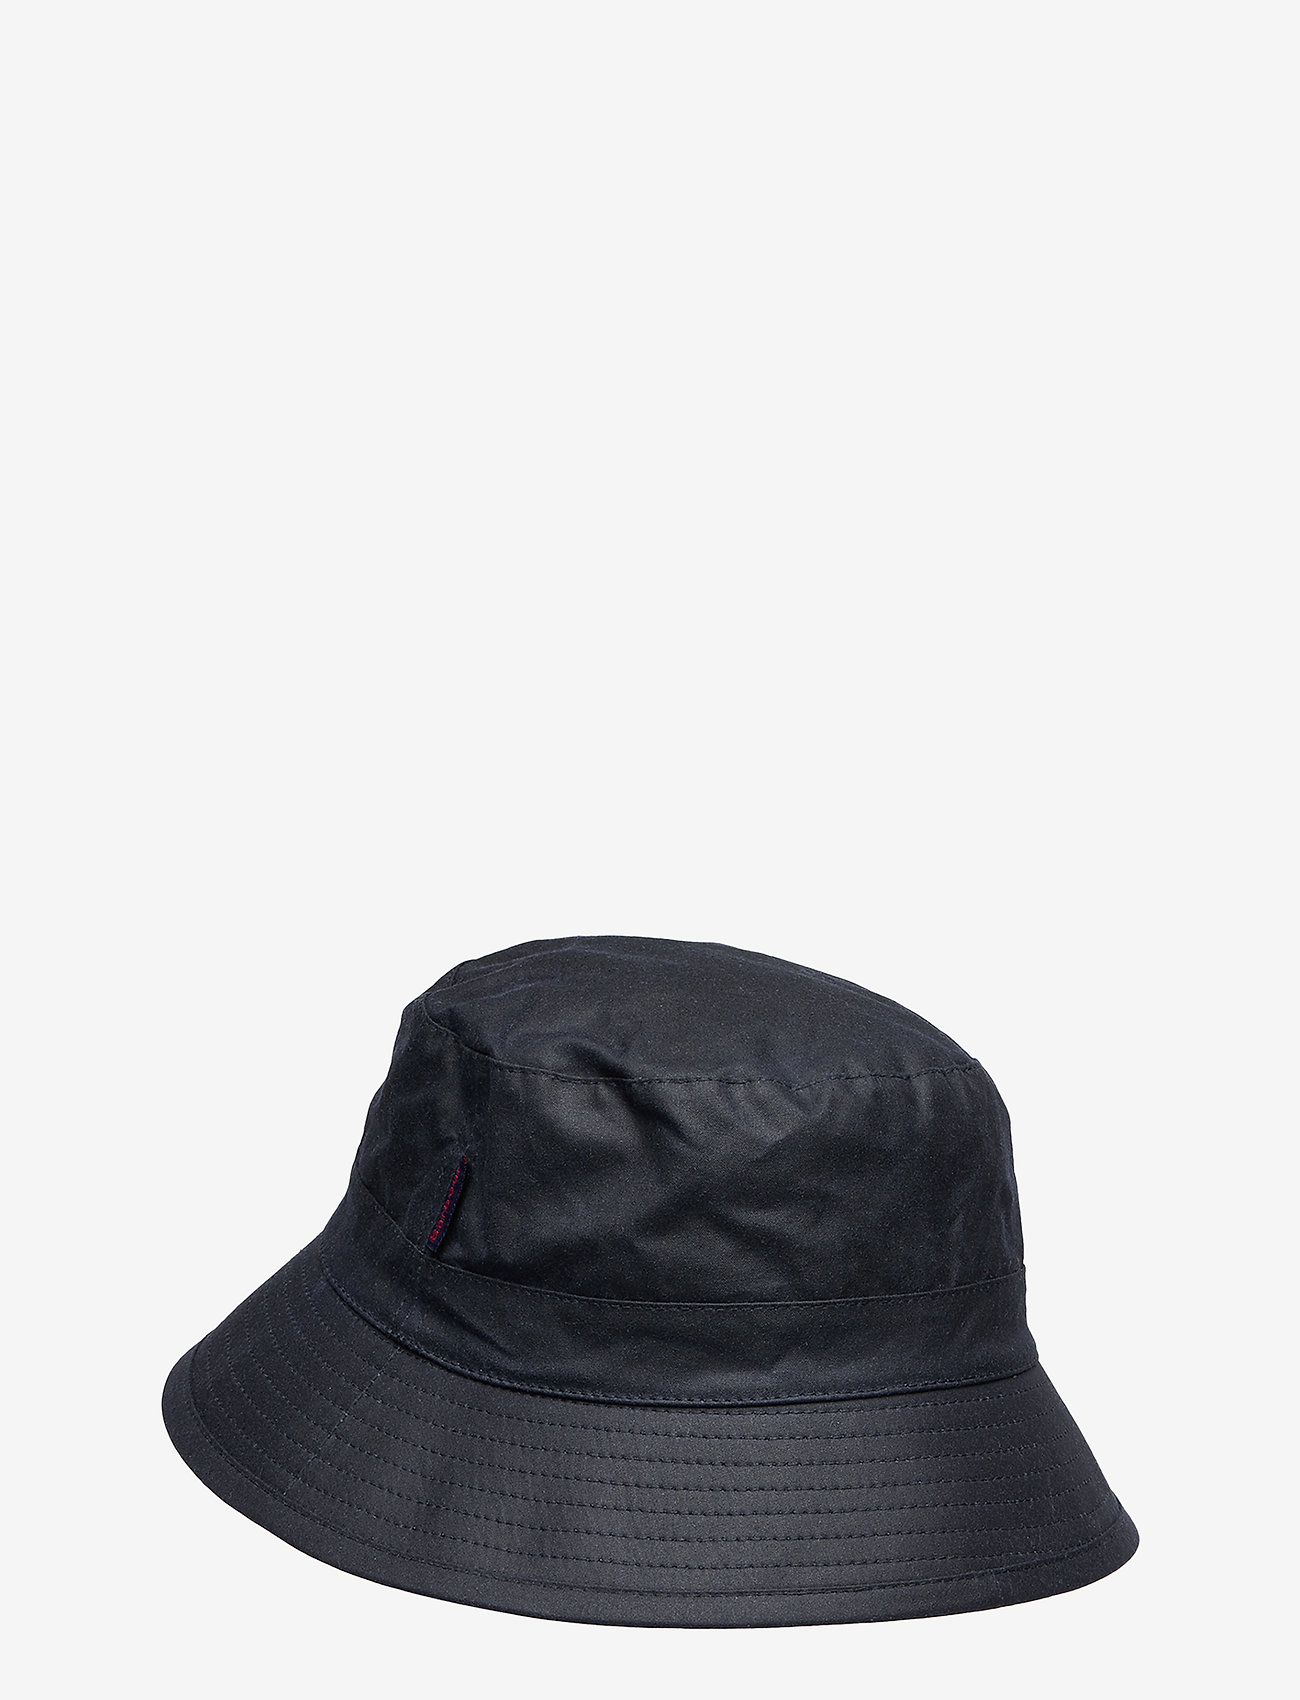 Barbour - Wax Sports Hat - kibirėlio formos kepurės - navy - 1